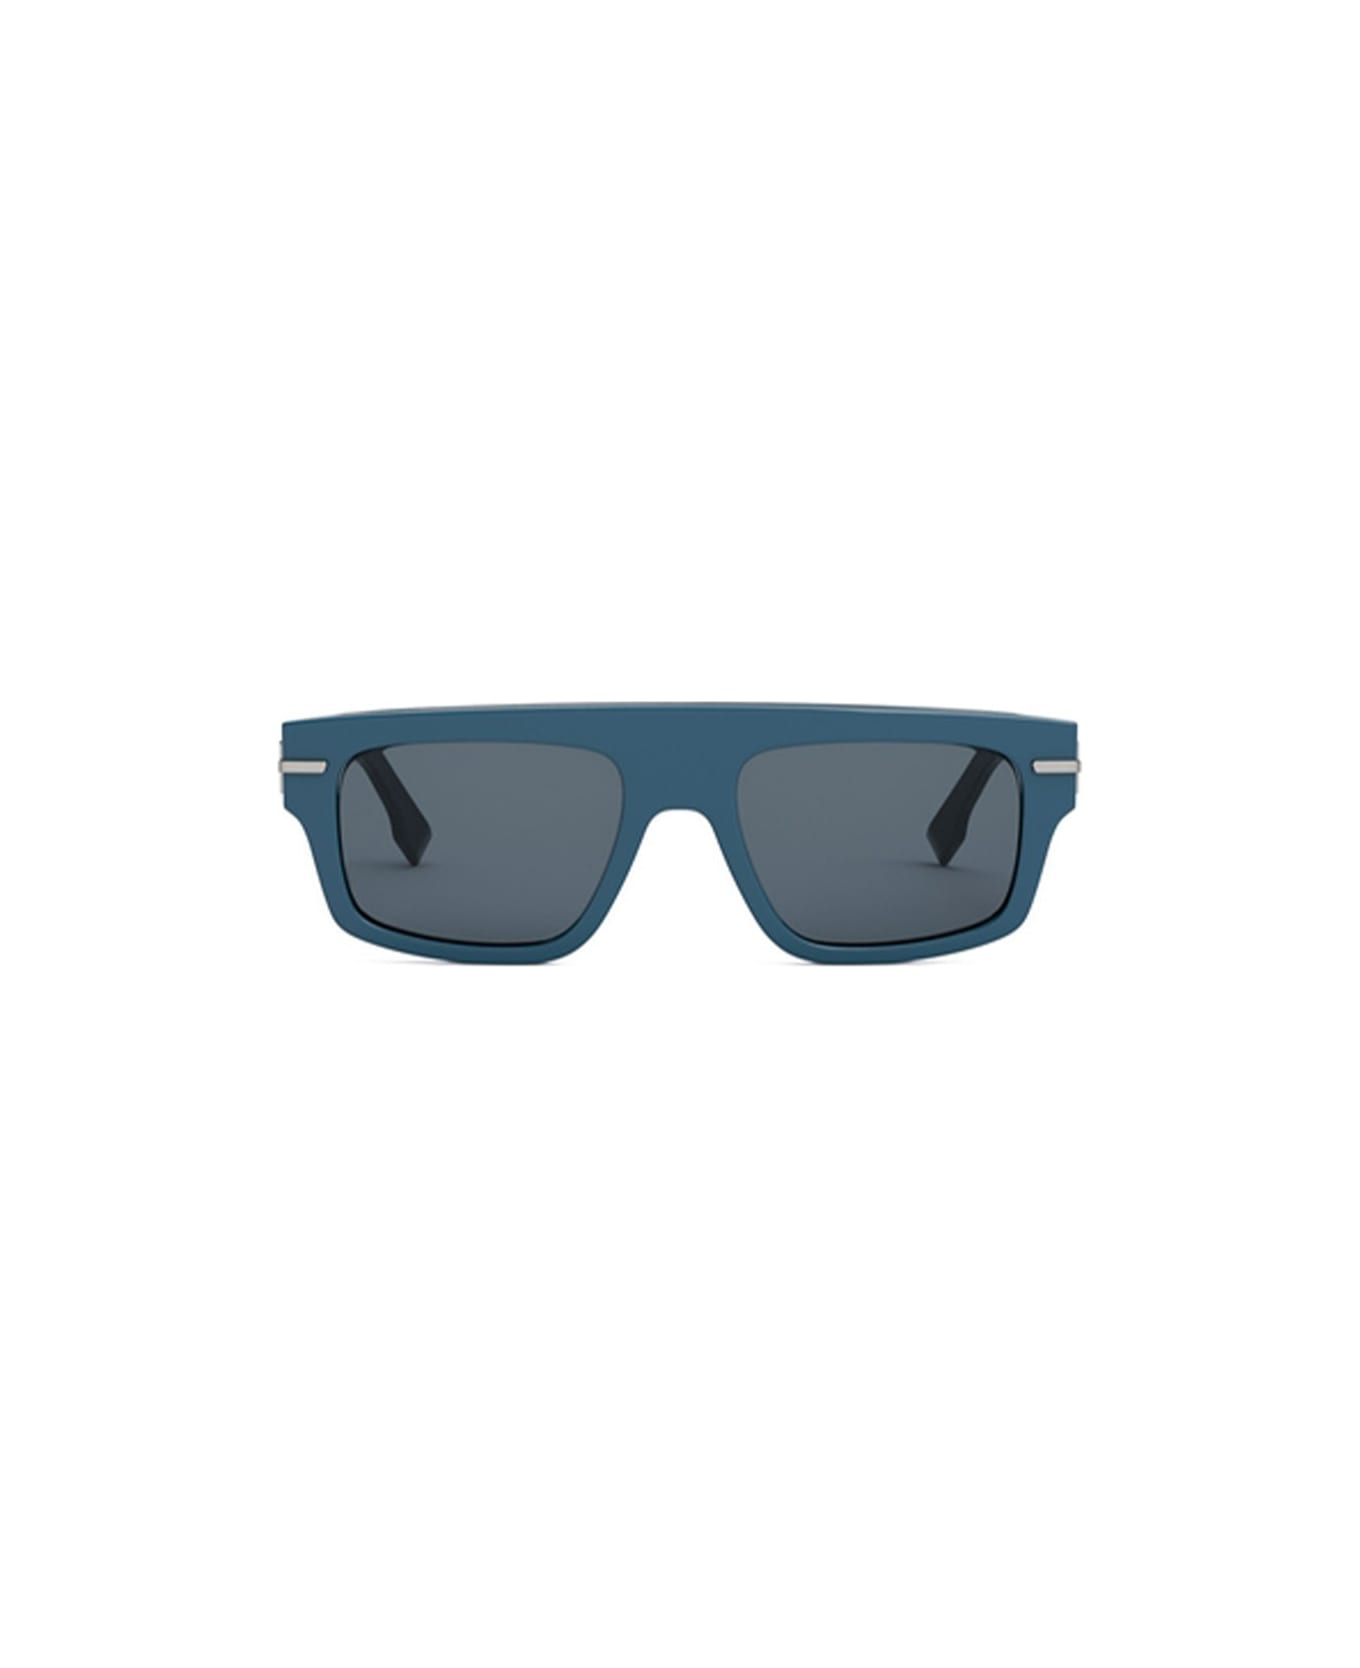 Fendi Eyewear Sunglasses - Verde/Grigio